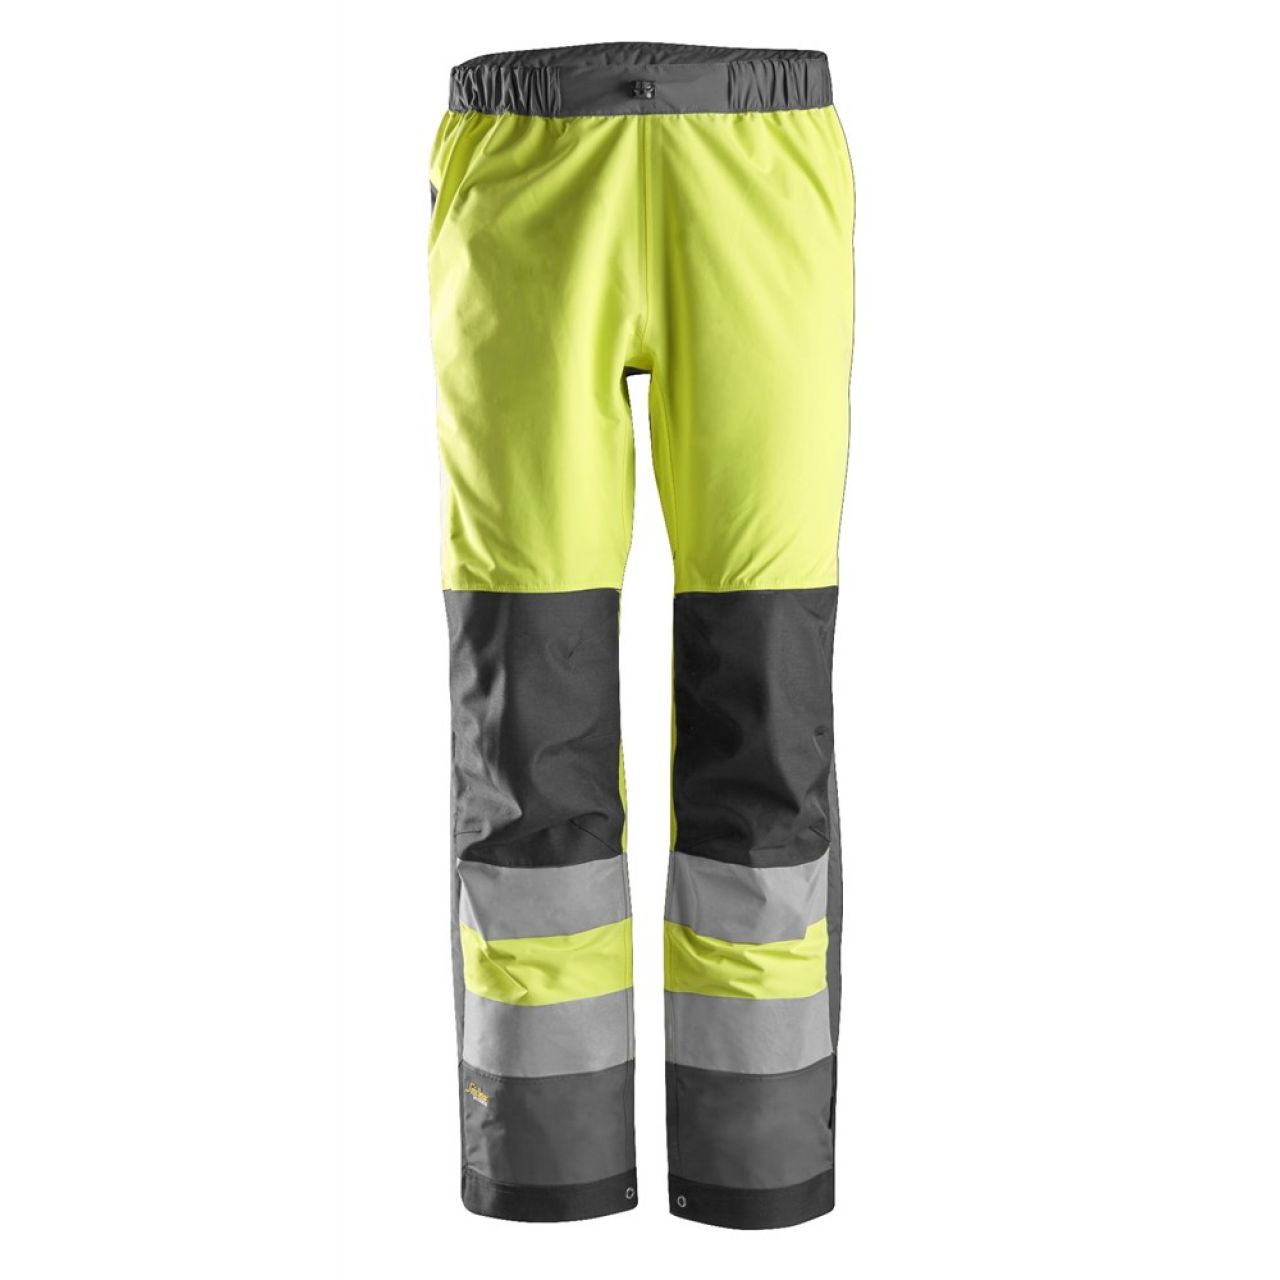 6530 Pantalones largos de trabajo impermeables Waterproof Shell de alta visibilidad clase 2 AllroundWork amarillo-gris acero talla XS